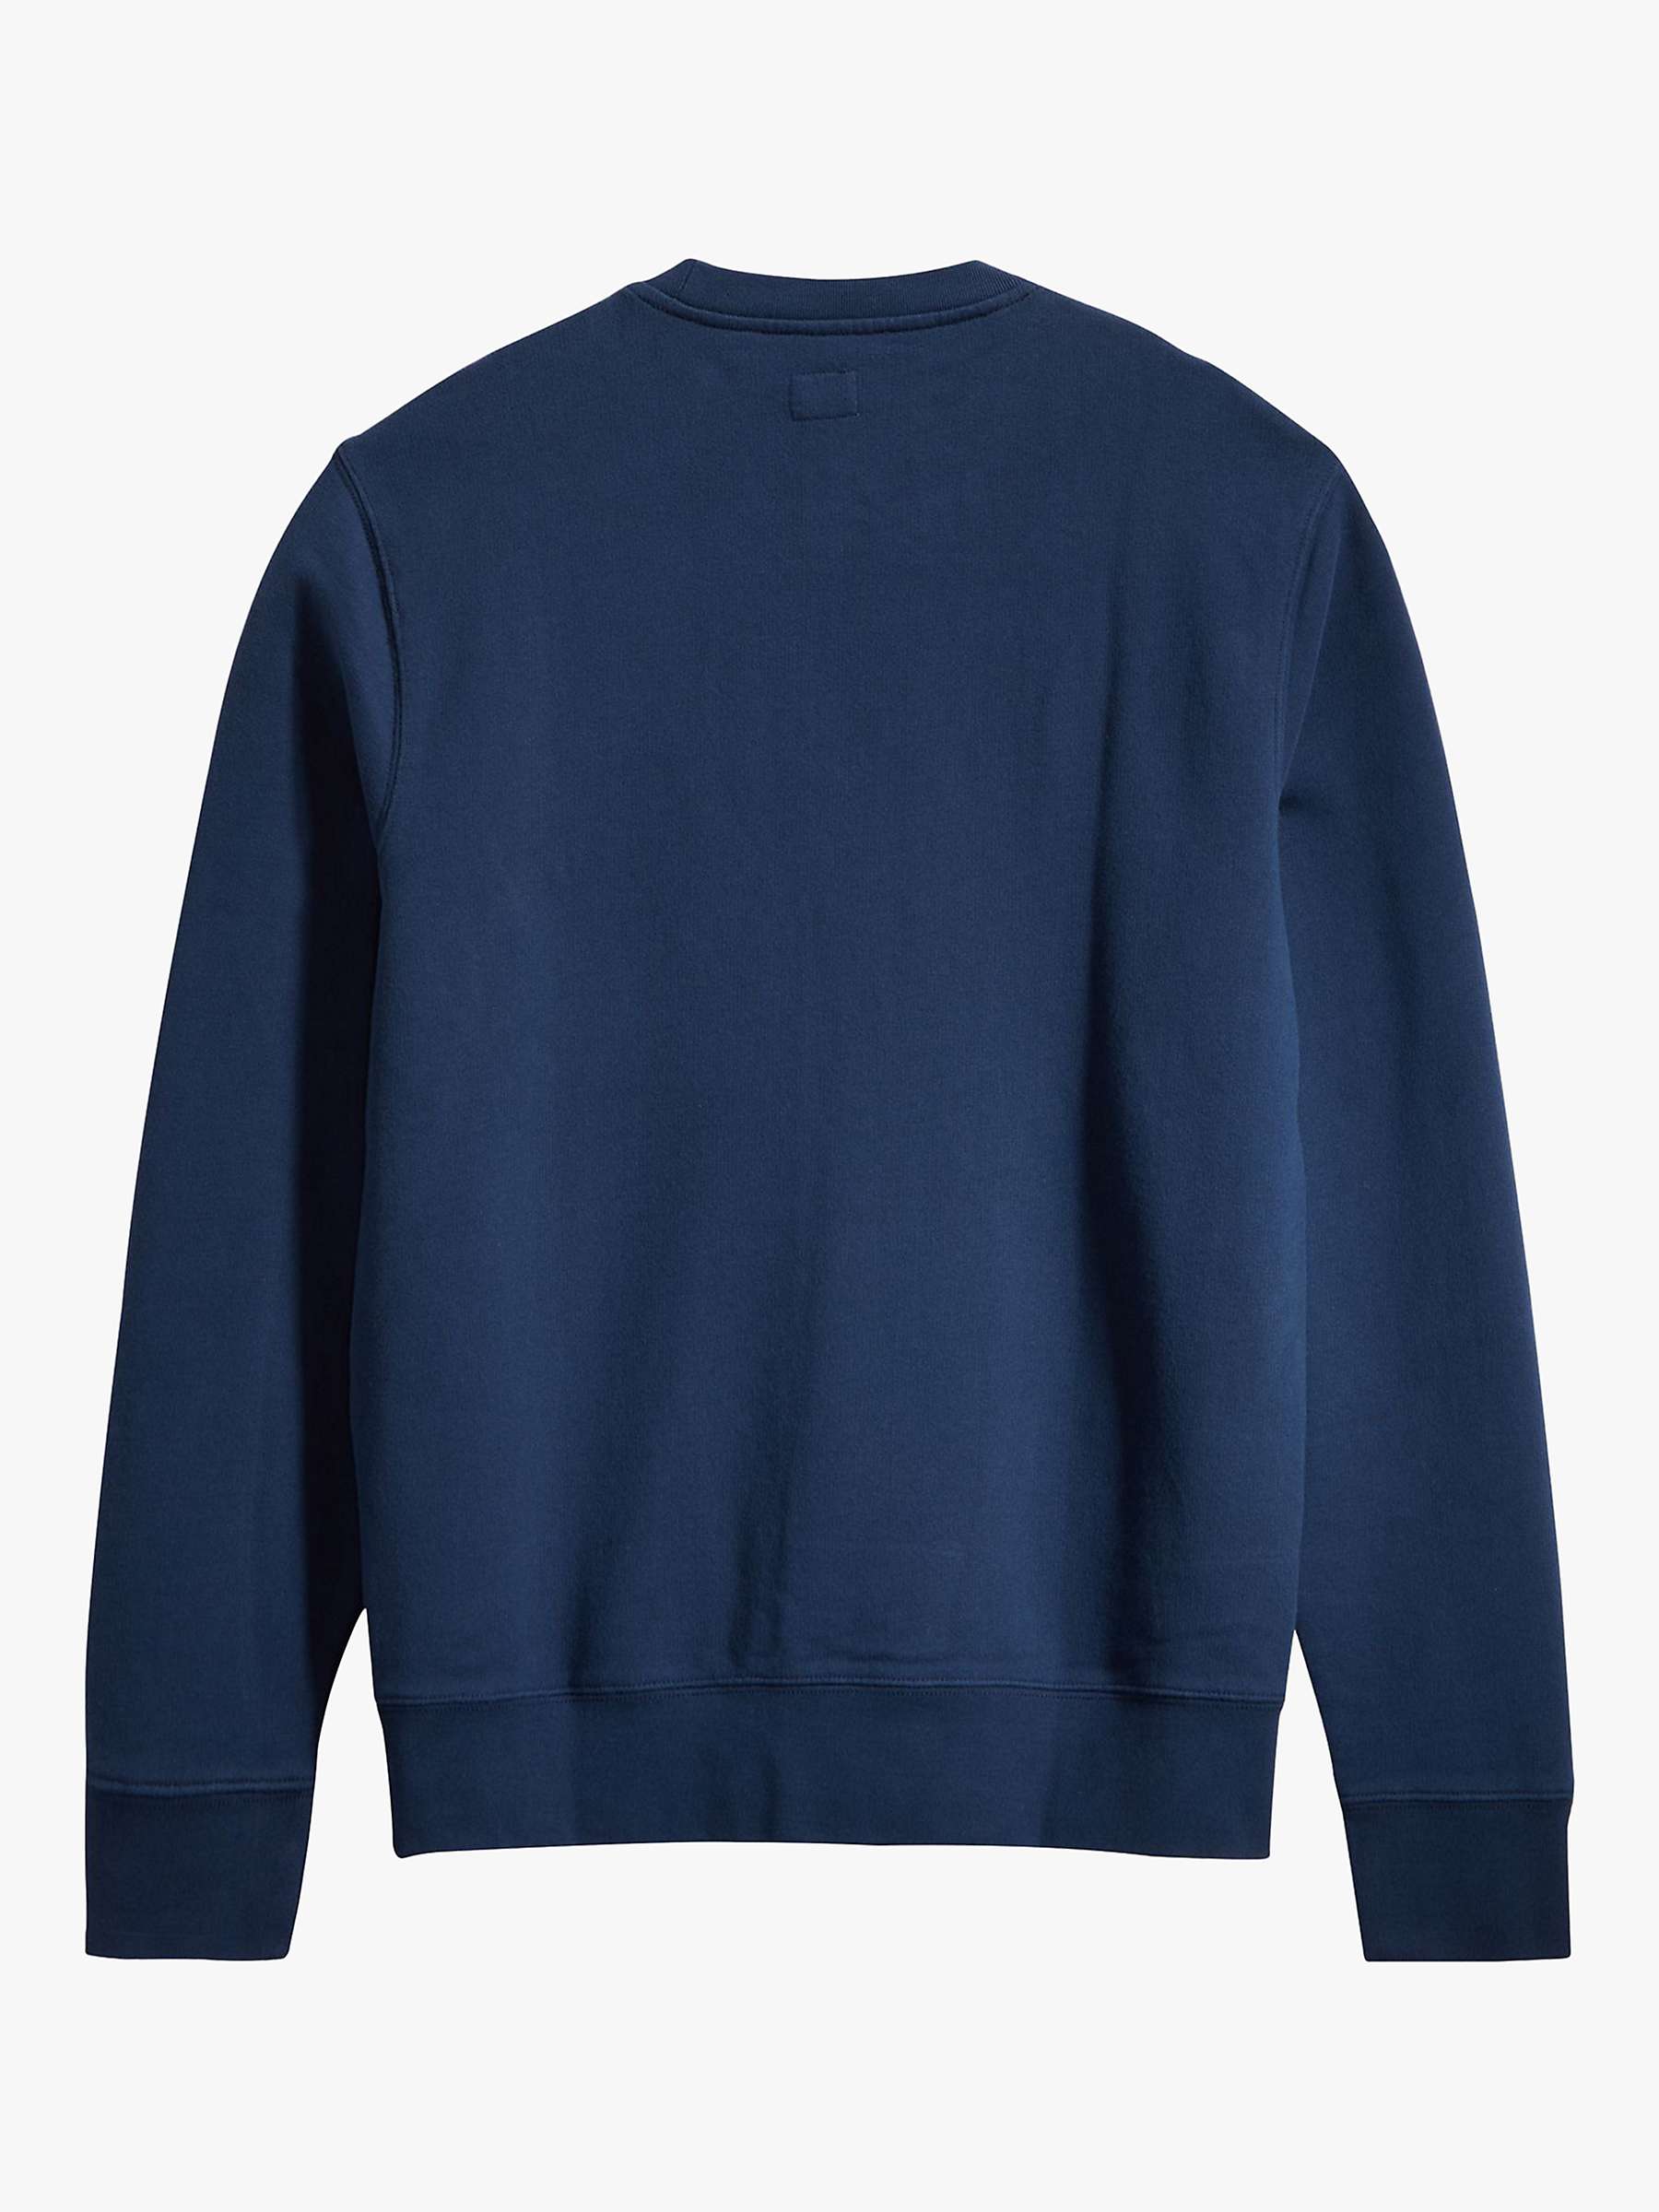 Buy Levi's Big & Tall Original Housemark Sweatshirt, Dress Blue Online at johnlewis.com